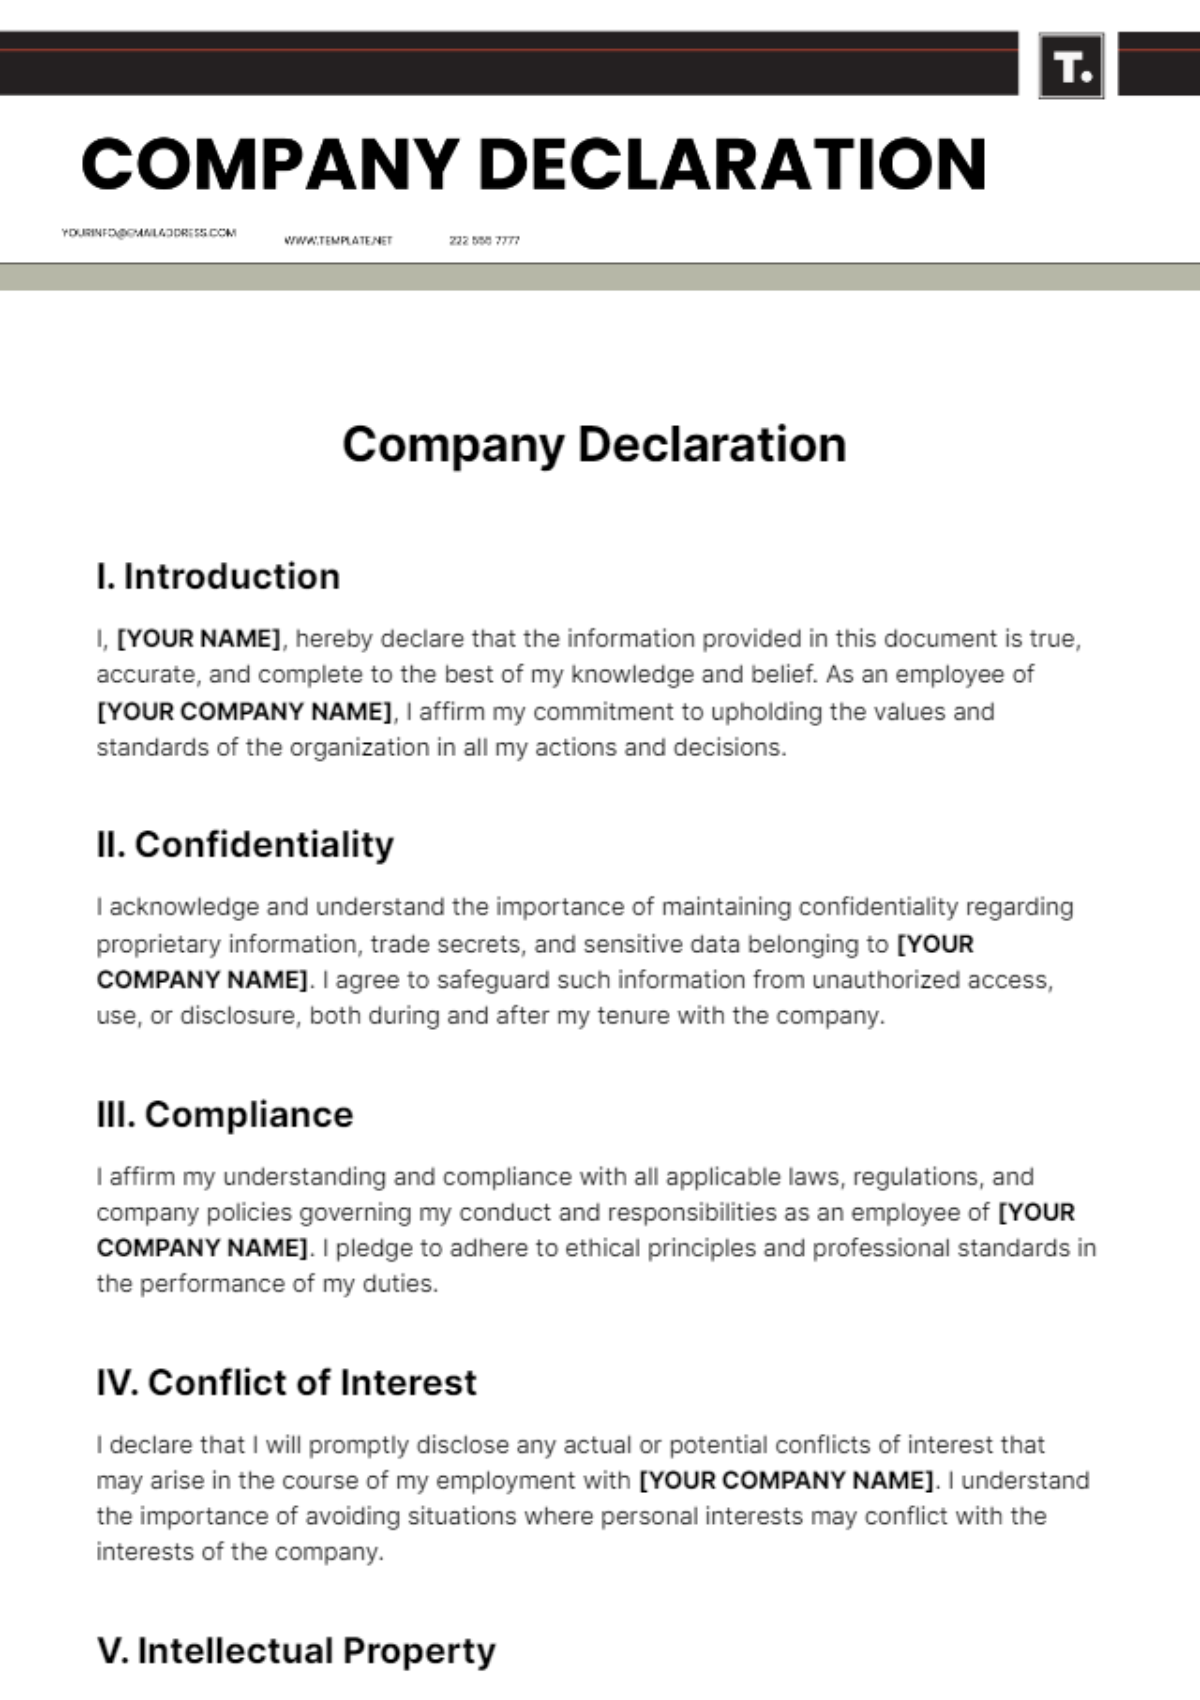 Company Declaration Template